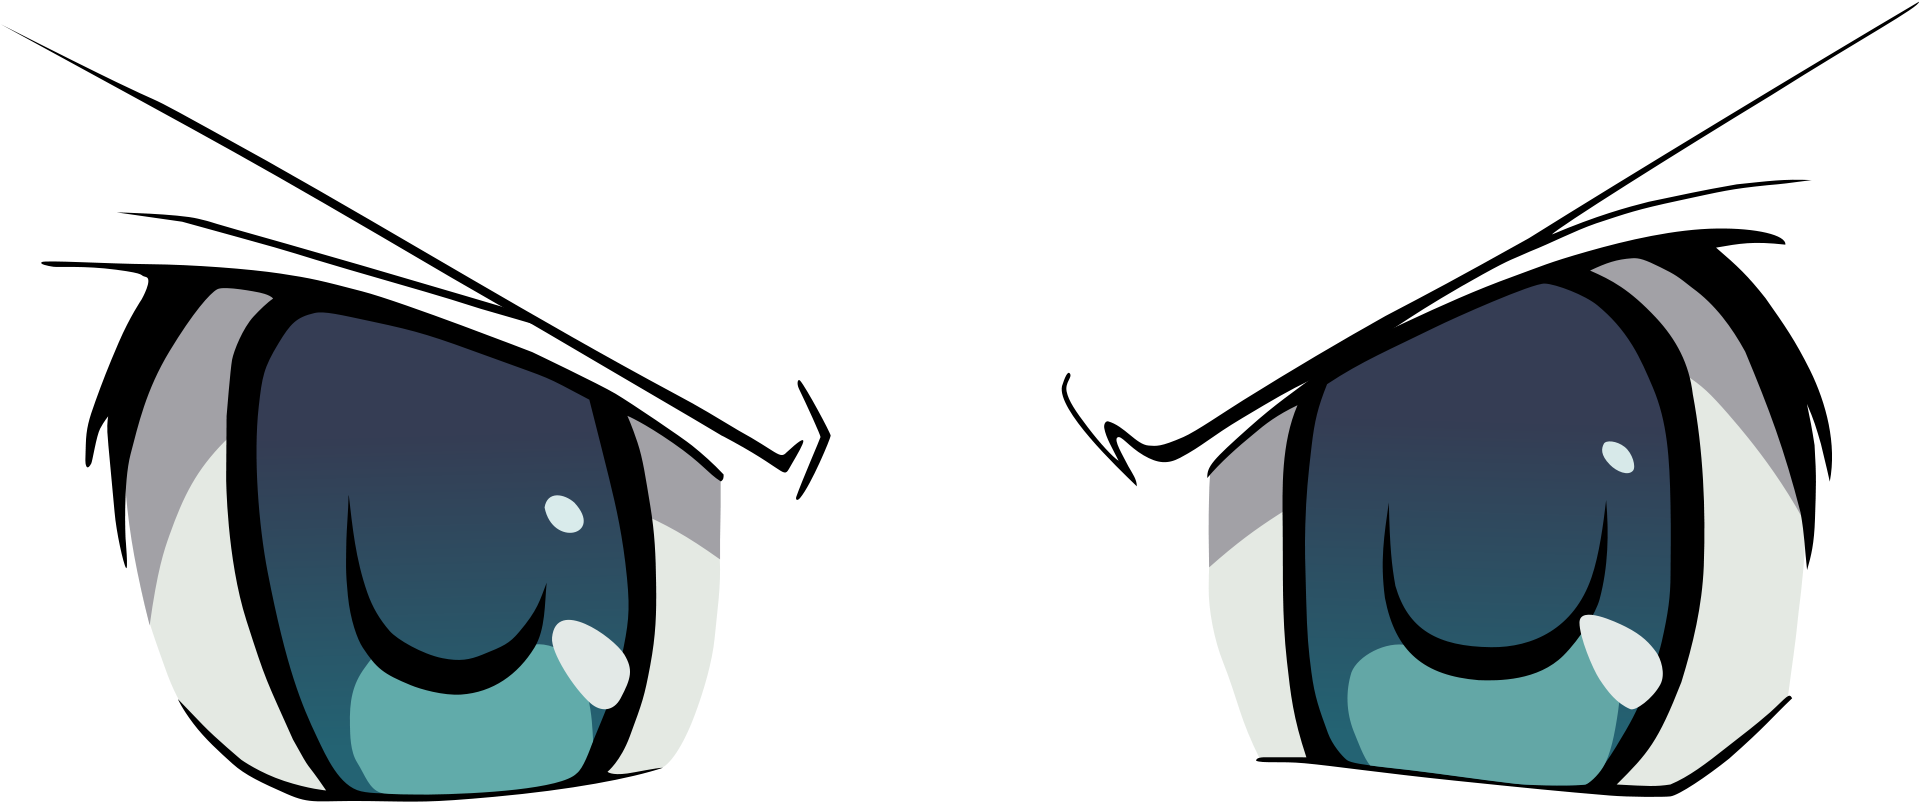 Expression Cartoon Eyes PNG Transparent Image